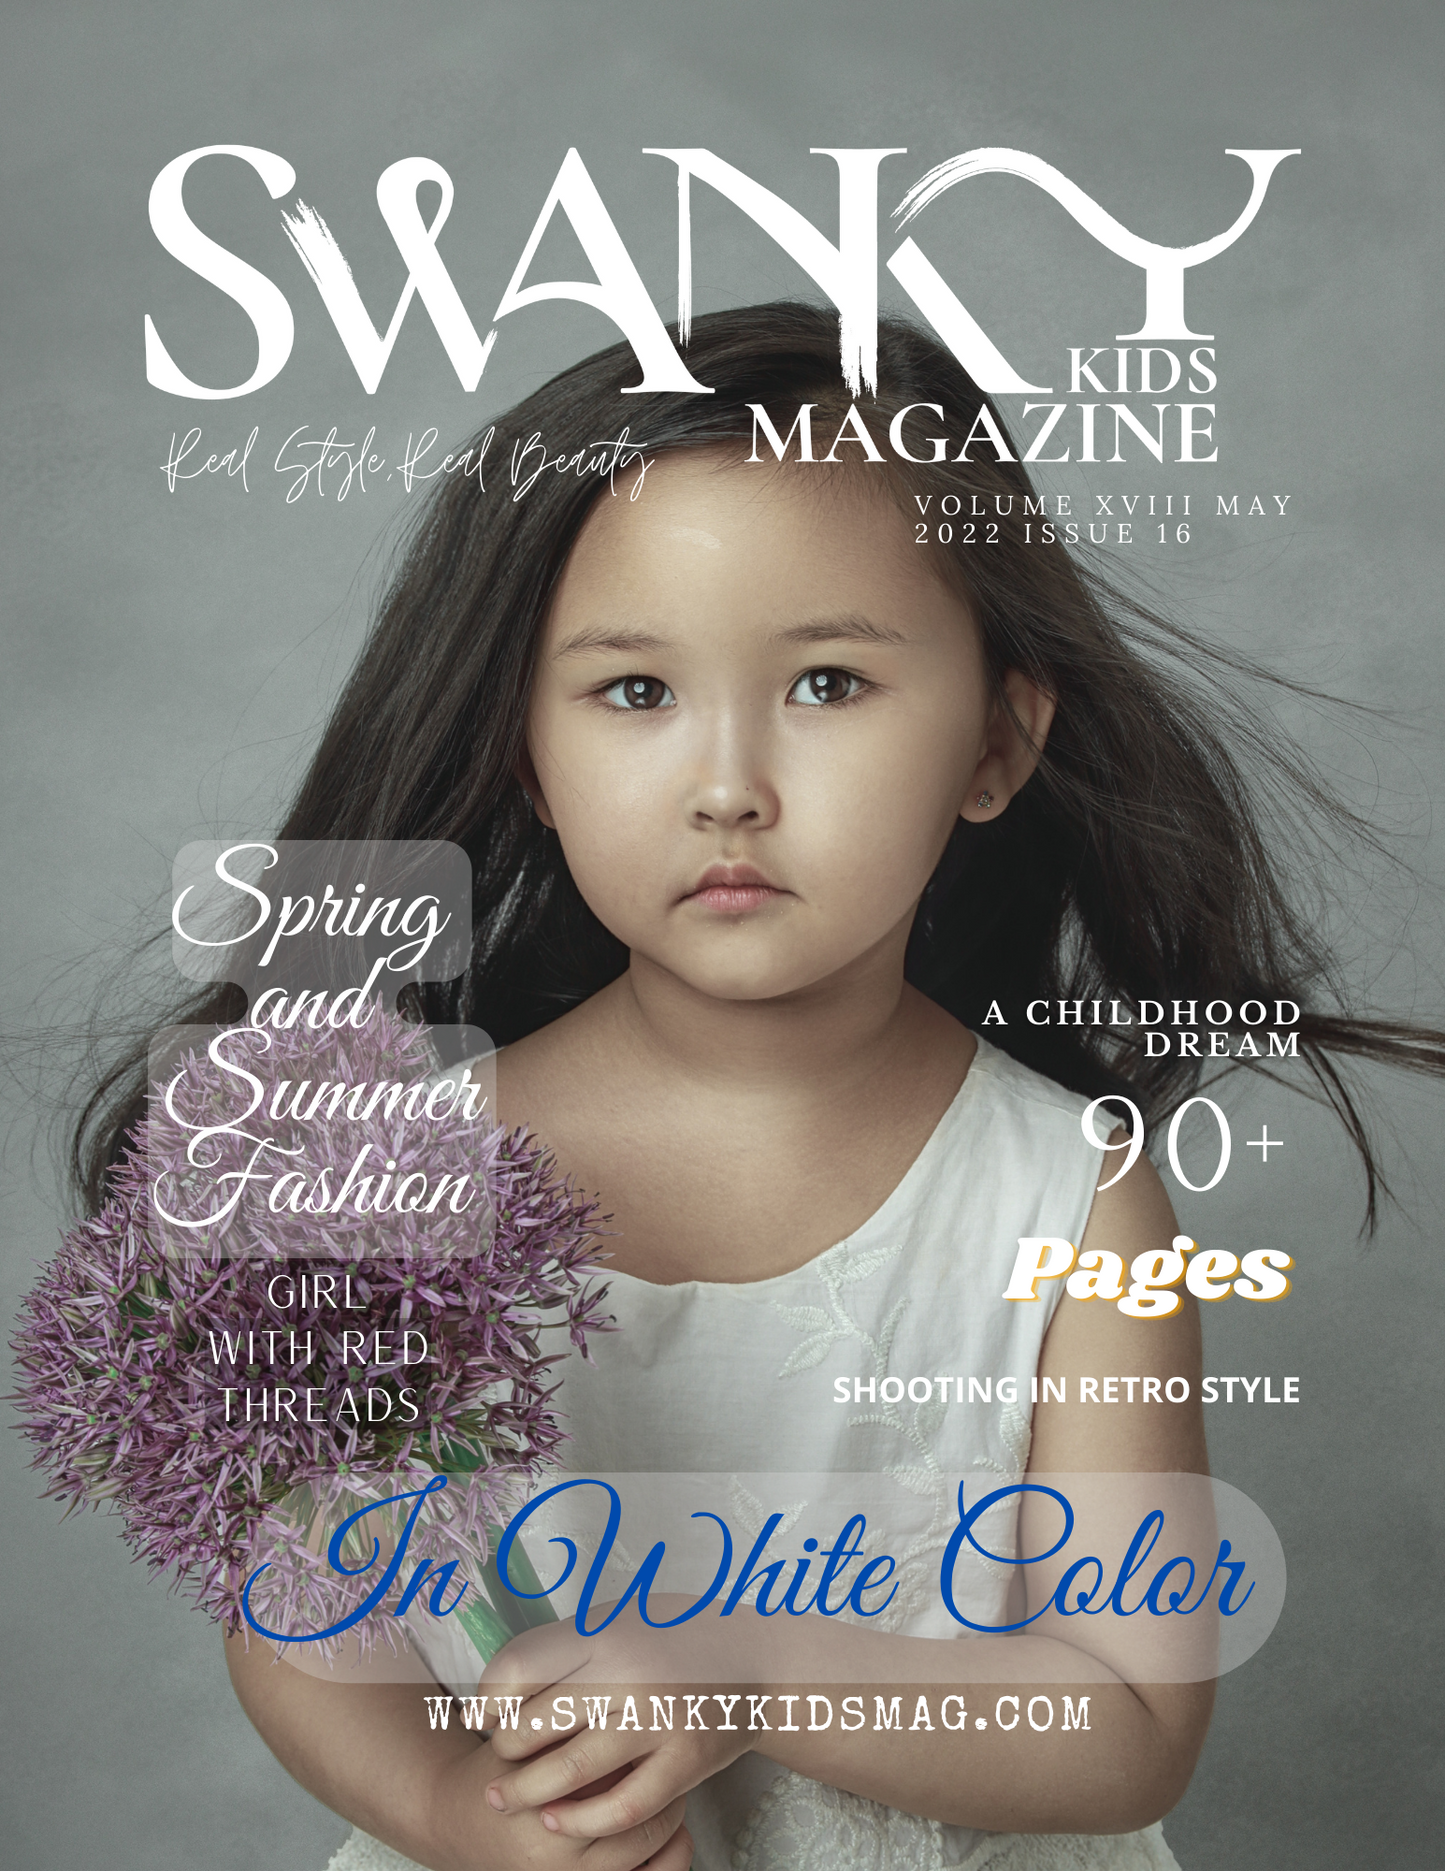 Swanky Kids Magazine MAY 2022 VOL XVIII Issue 16